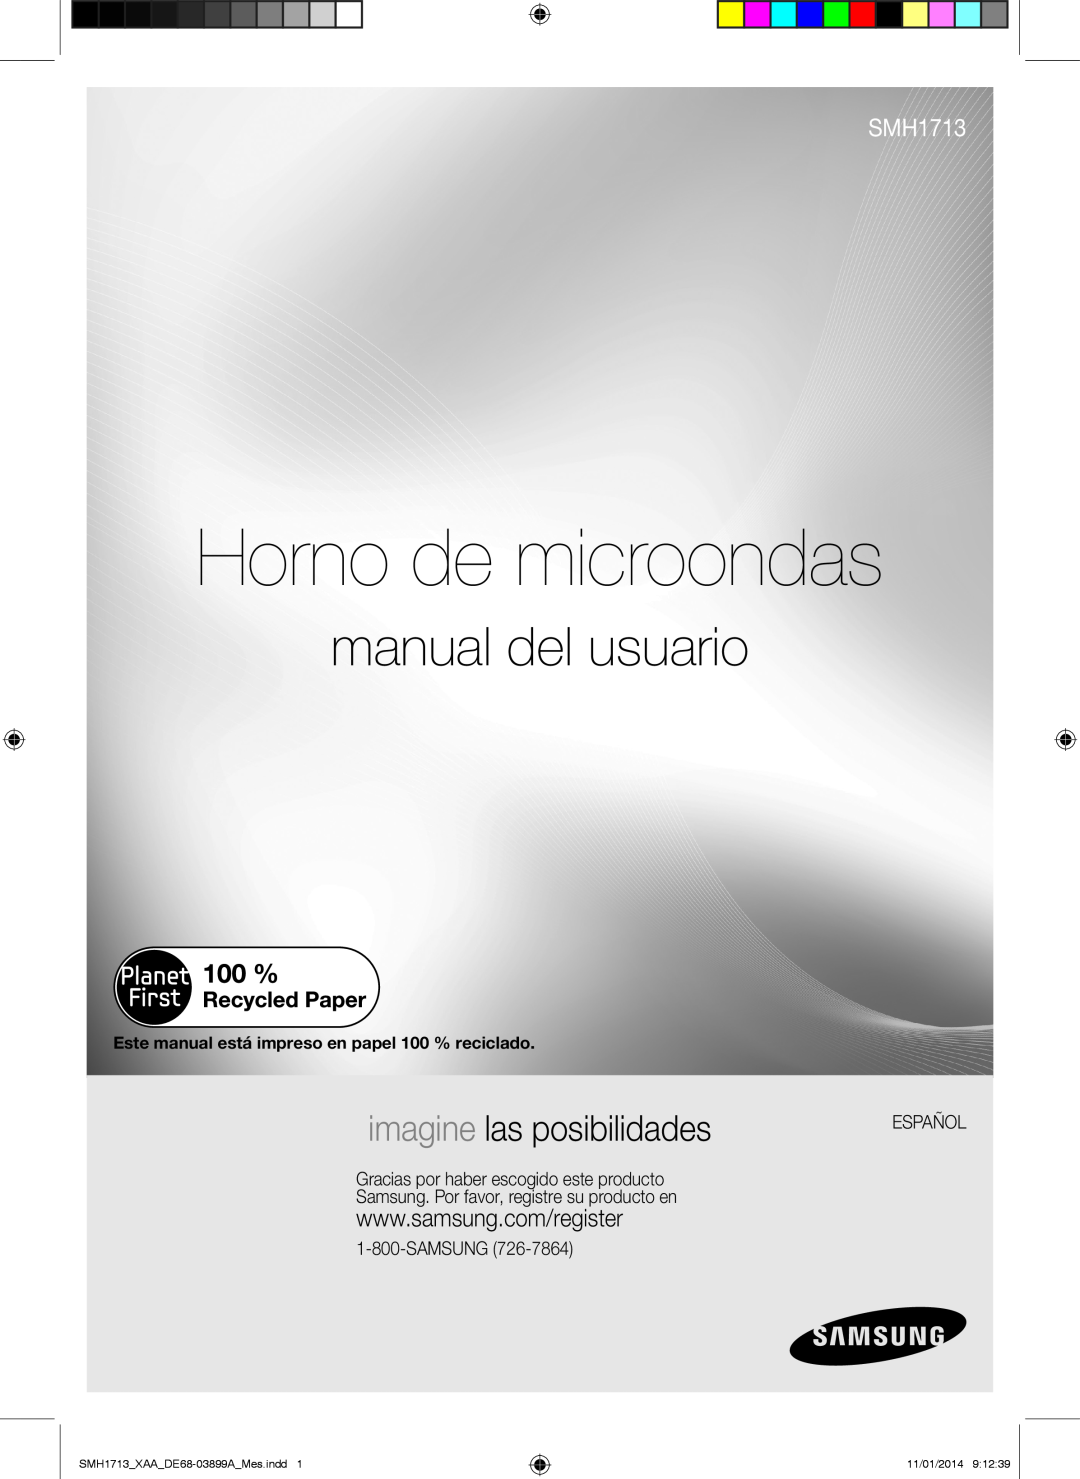 Samsung SMH1713 Horno de microondas, manual del usuario, imagine las posibilidades, Samsung, Español, 11/01/2014 